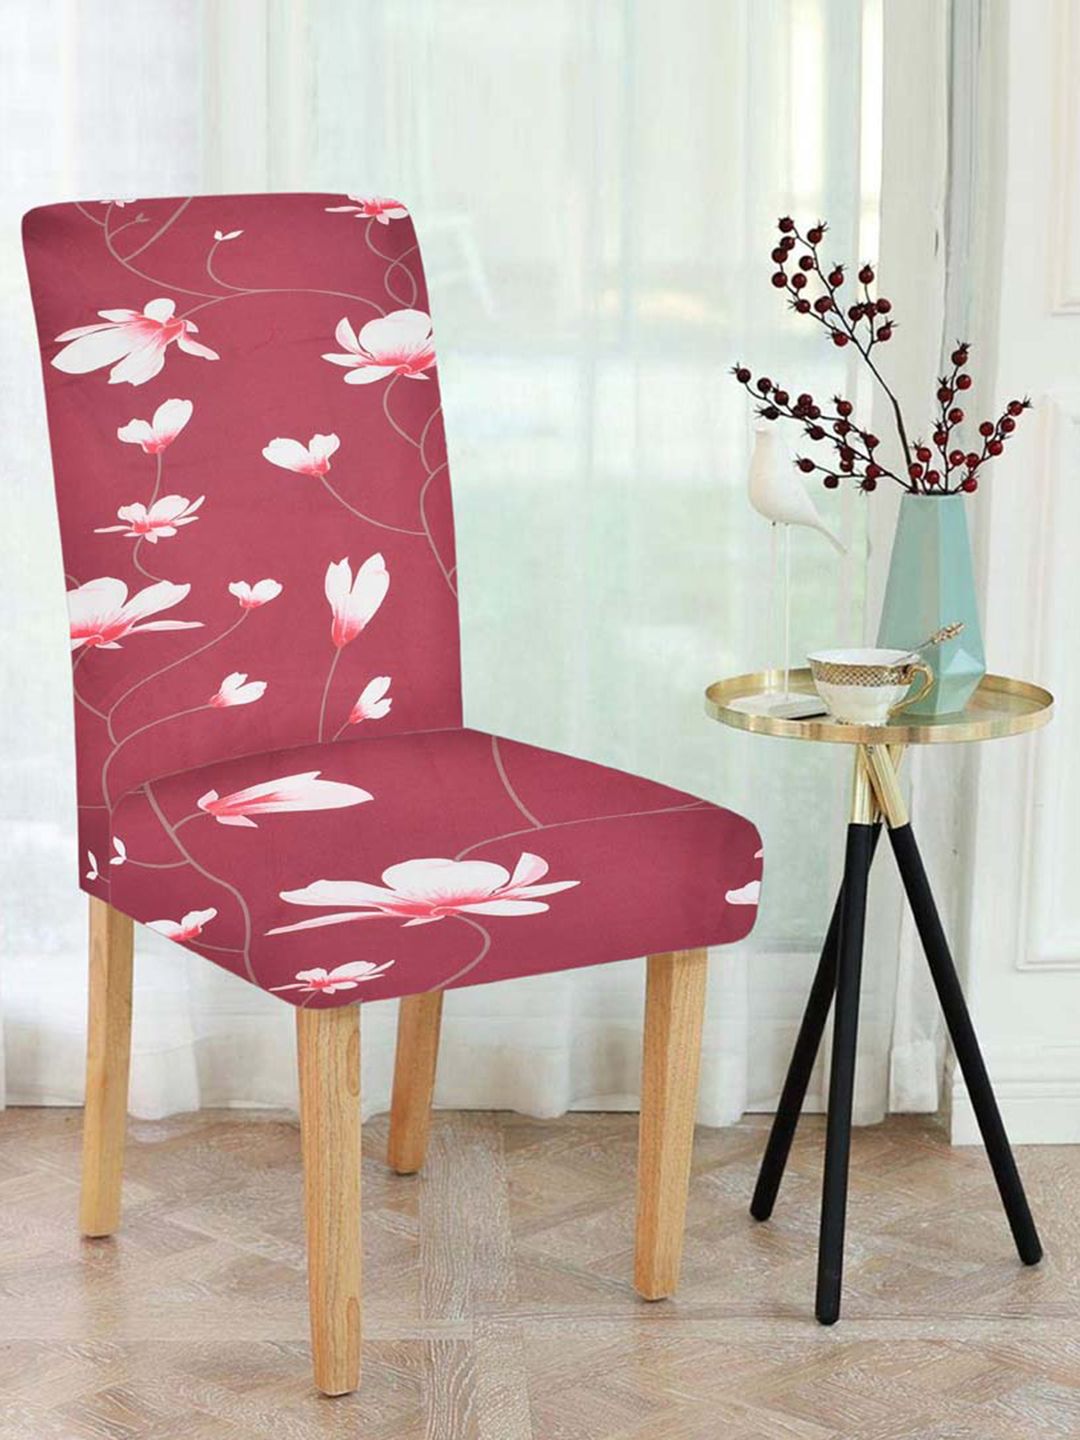 Slushy Mushy Set of 4 Printed Chair Covers Price in India